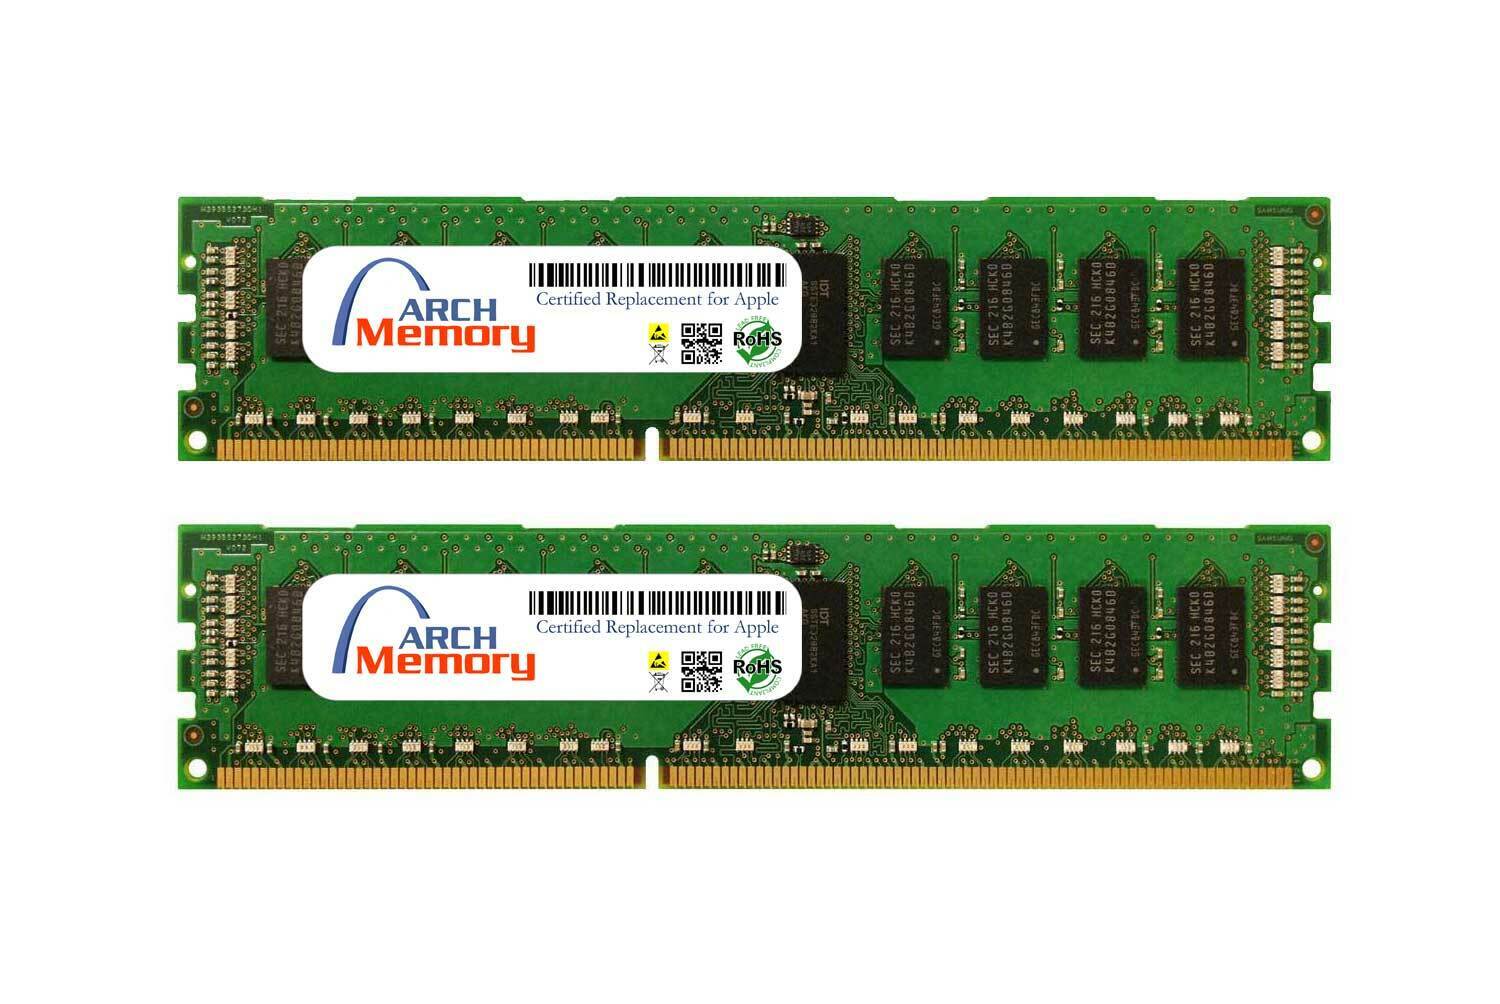 MD878B/A Certified for Apple RAM 16GB (2x8GB) DDR3-1866 ECC Reg Server Memory